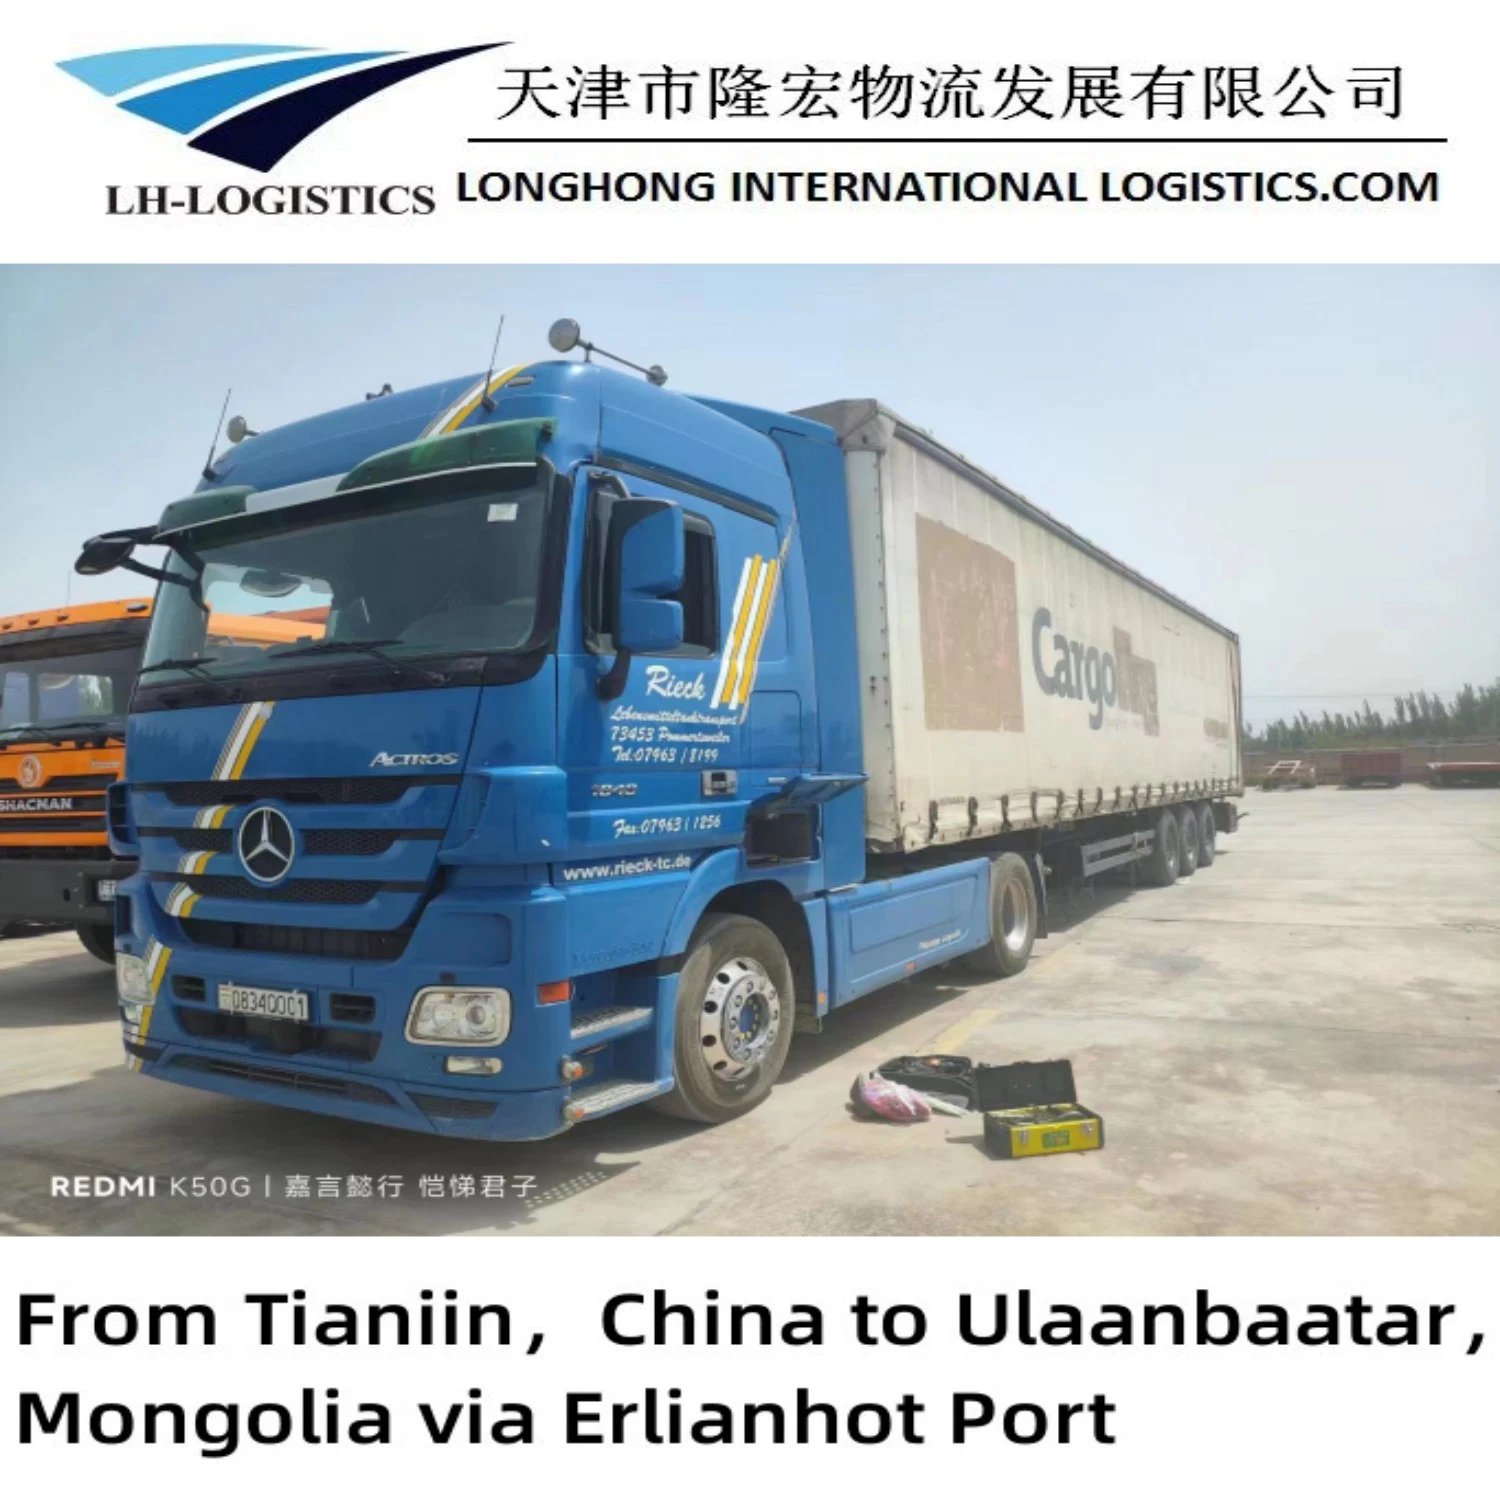 Professional 1688 Truck Transportation Service Shipping From China to Bishkek, Tashkent, Dushanbe DDP From China.